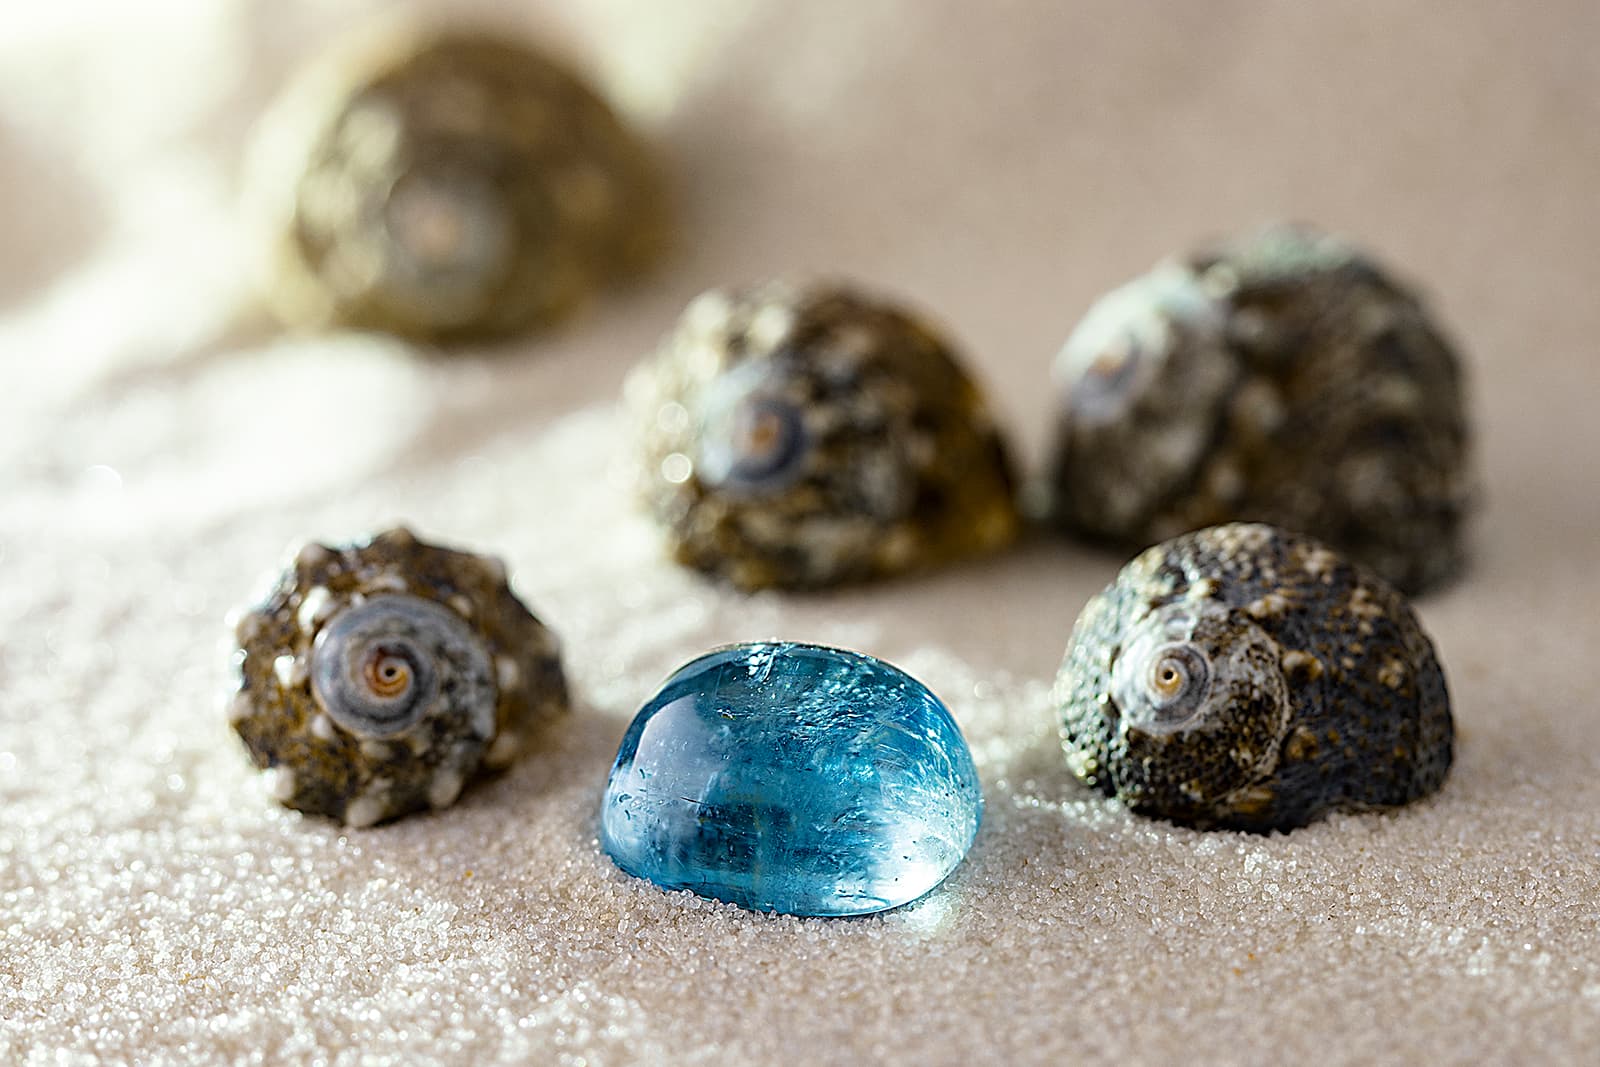 A light blue cabochon gemstone offered by specialist gemstone cutting business, Gebrüder Meelis